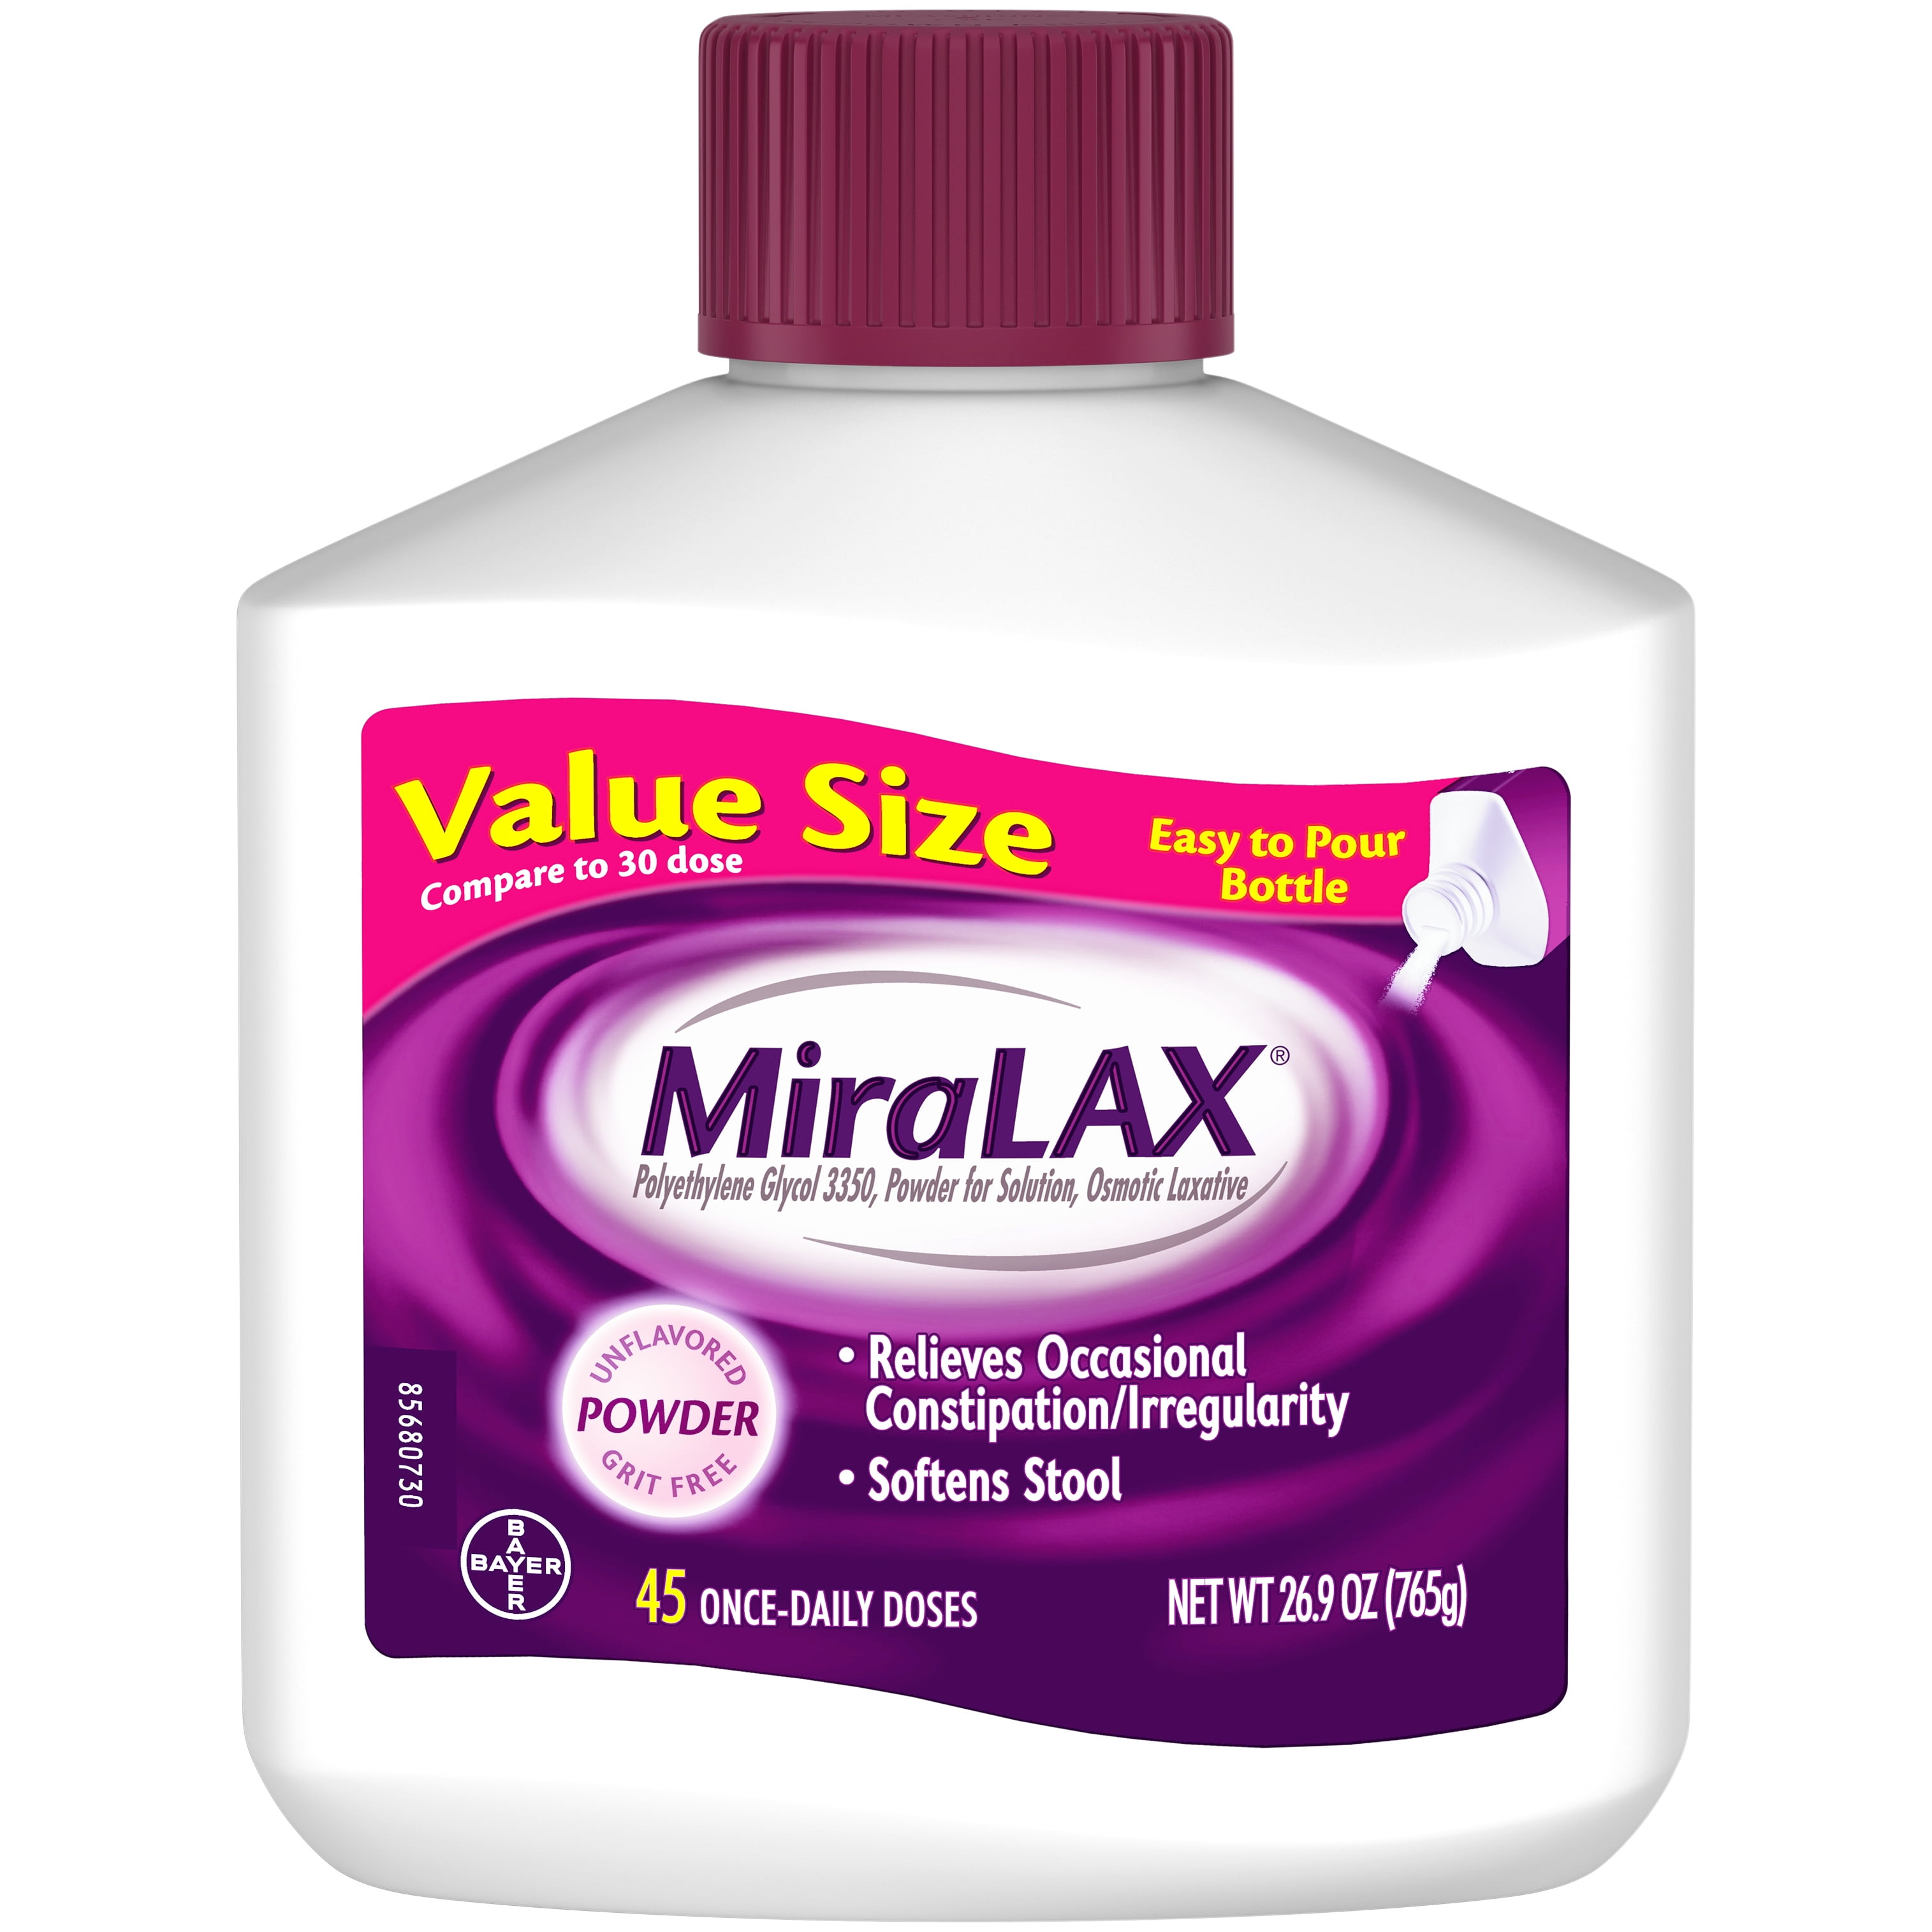 MiraLAX Laxative Powder For Gentle Constipation Relief 45 Doses Walmart Walmart